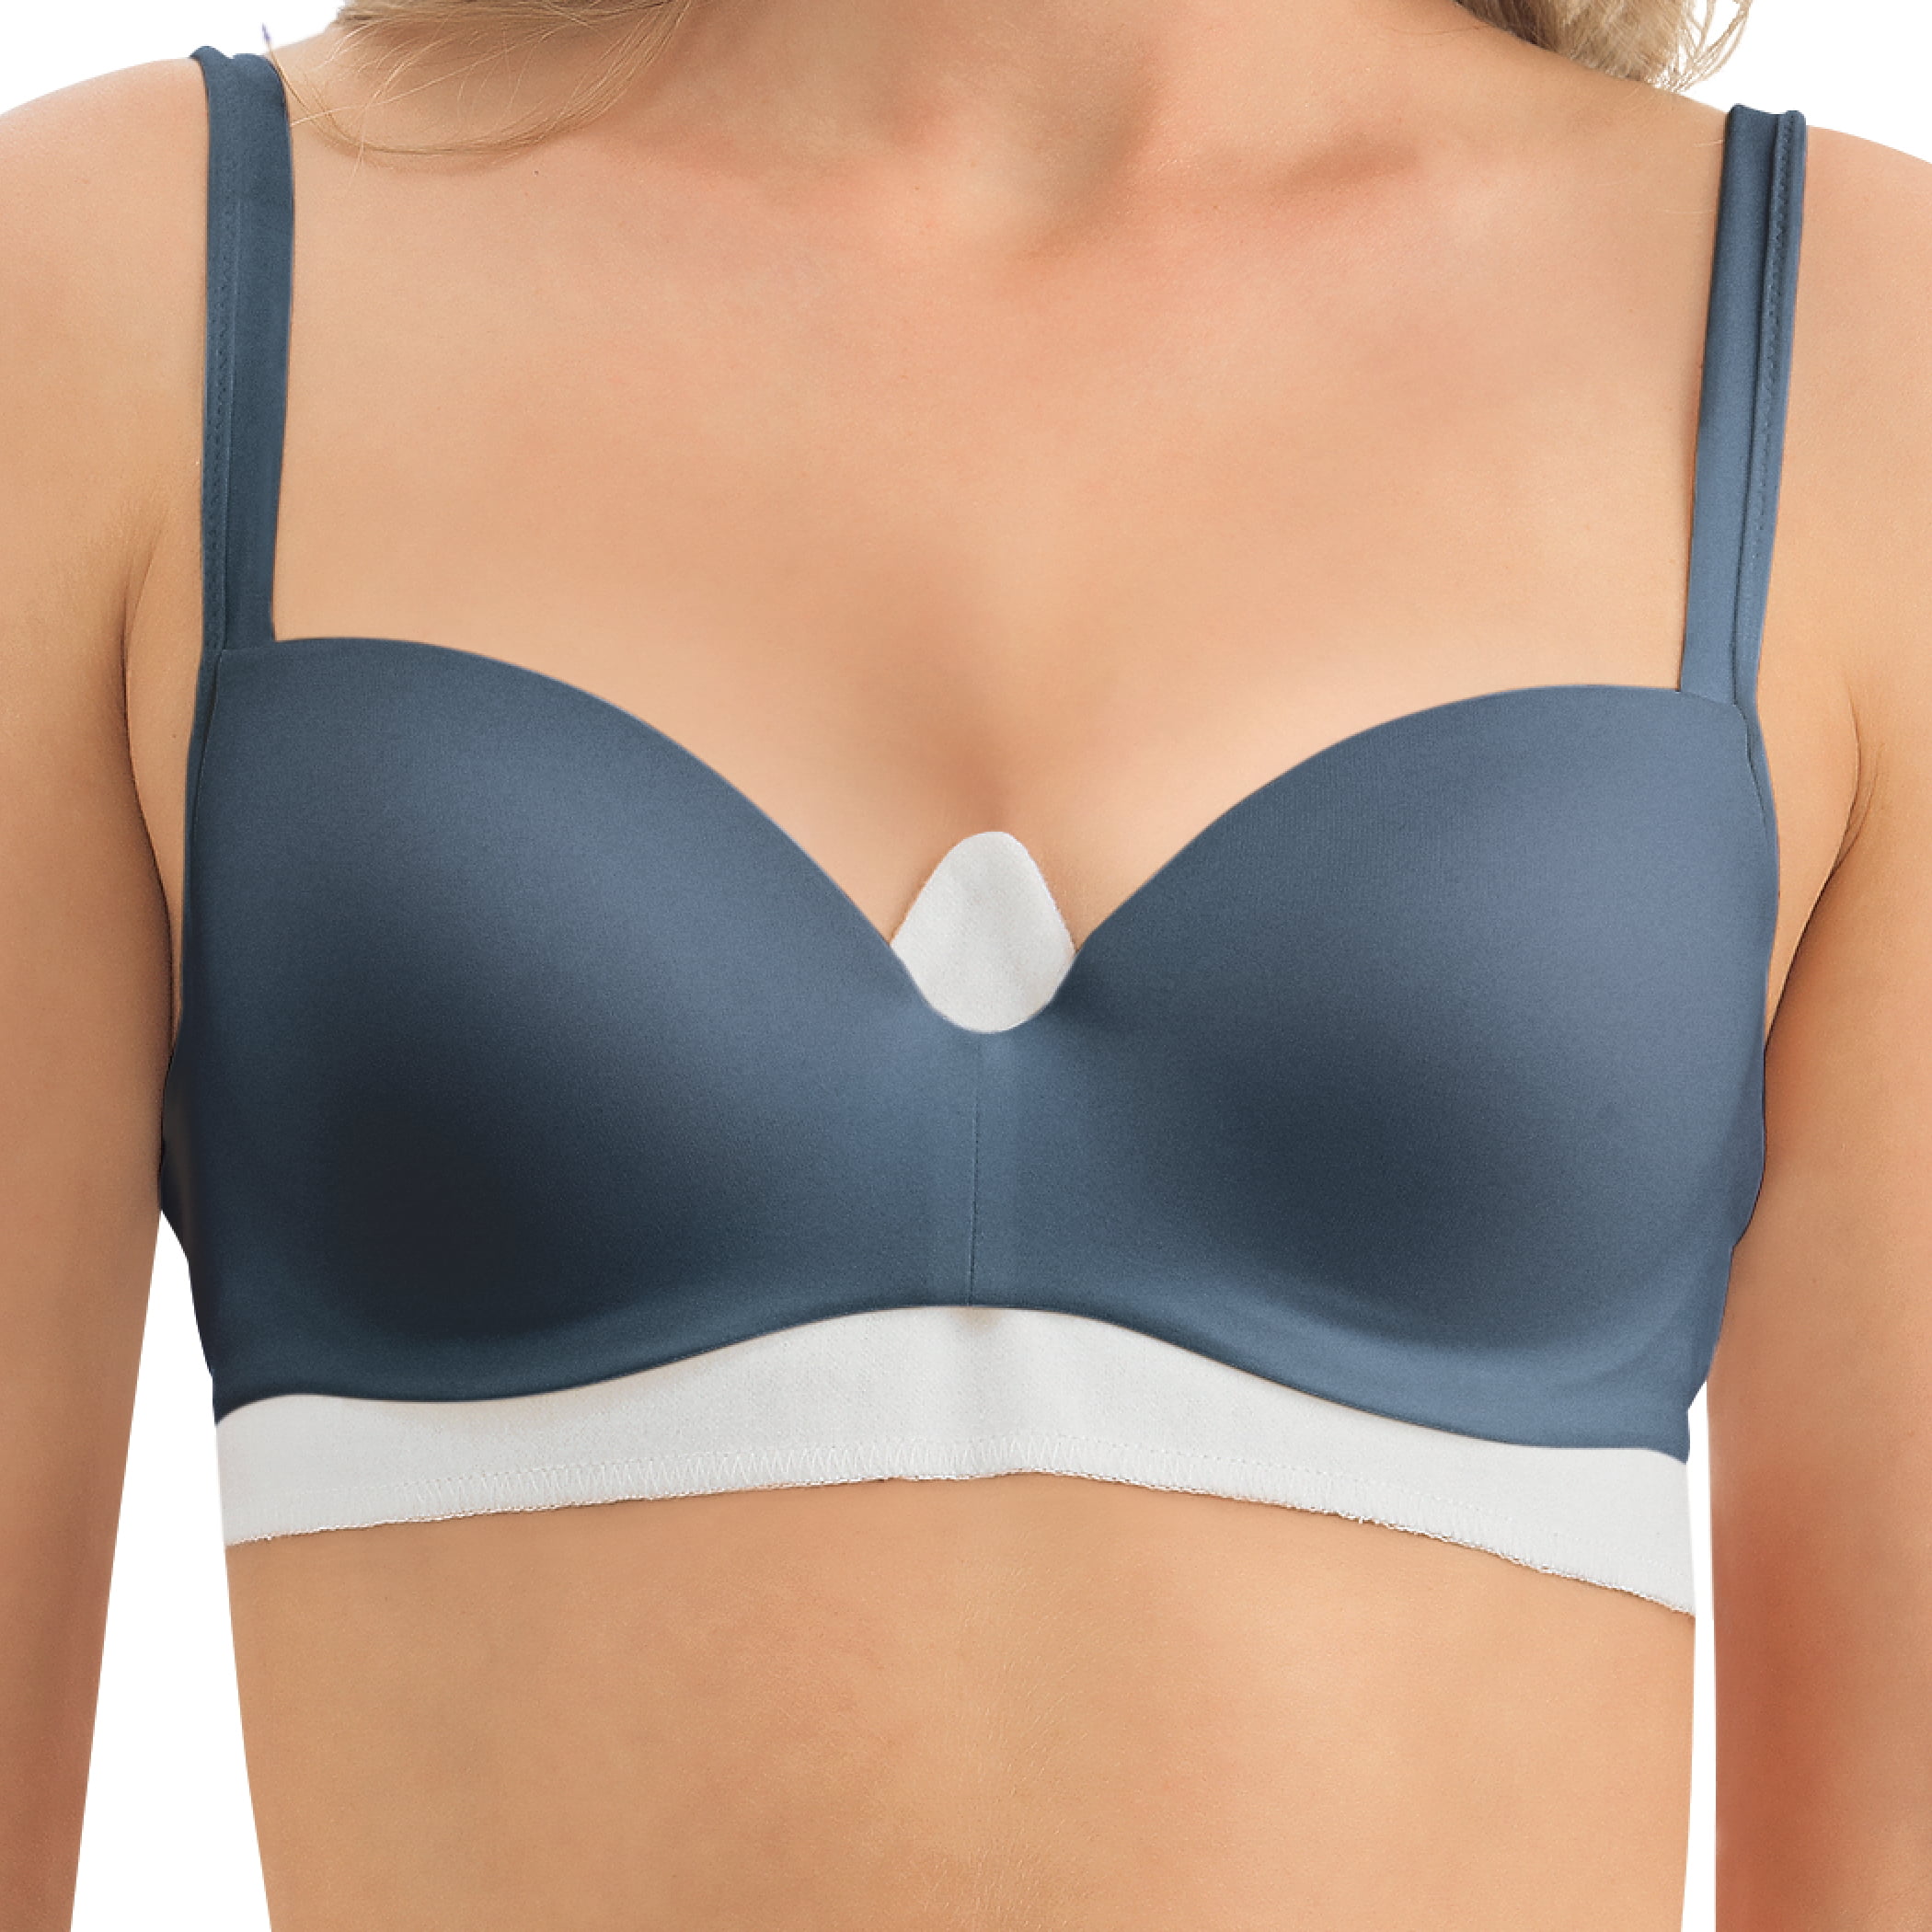 Zhanmai 6 Pcs Bra Liners for Sweating Rash Boob Sweat Liner White Bra Pads Cotton Bra Liners Under Breast Pads for Women 